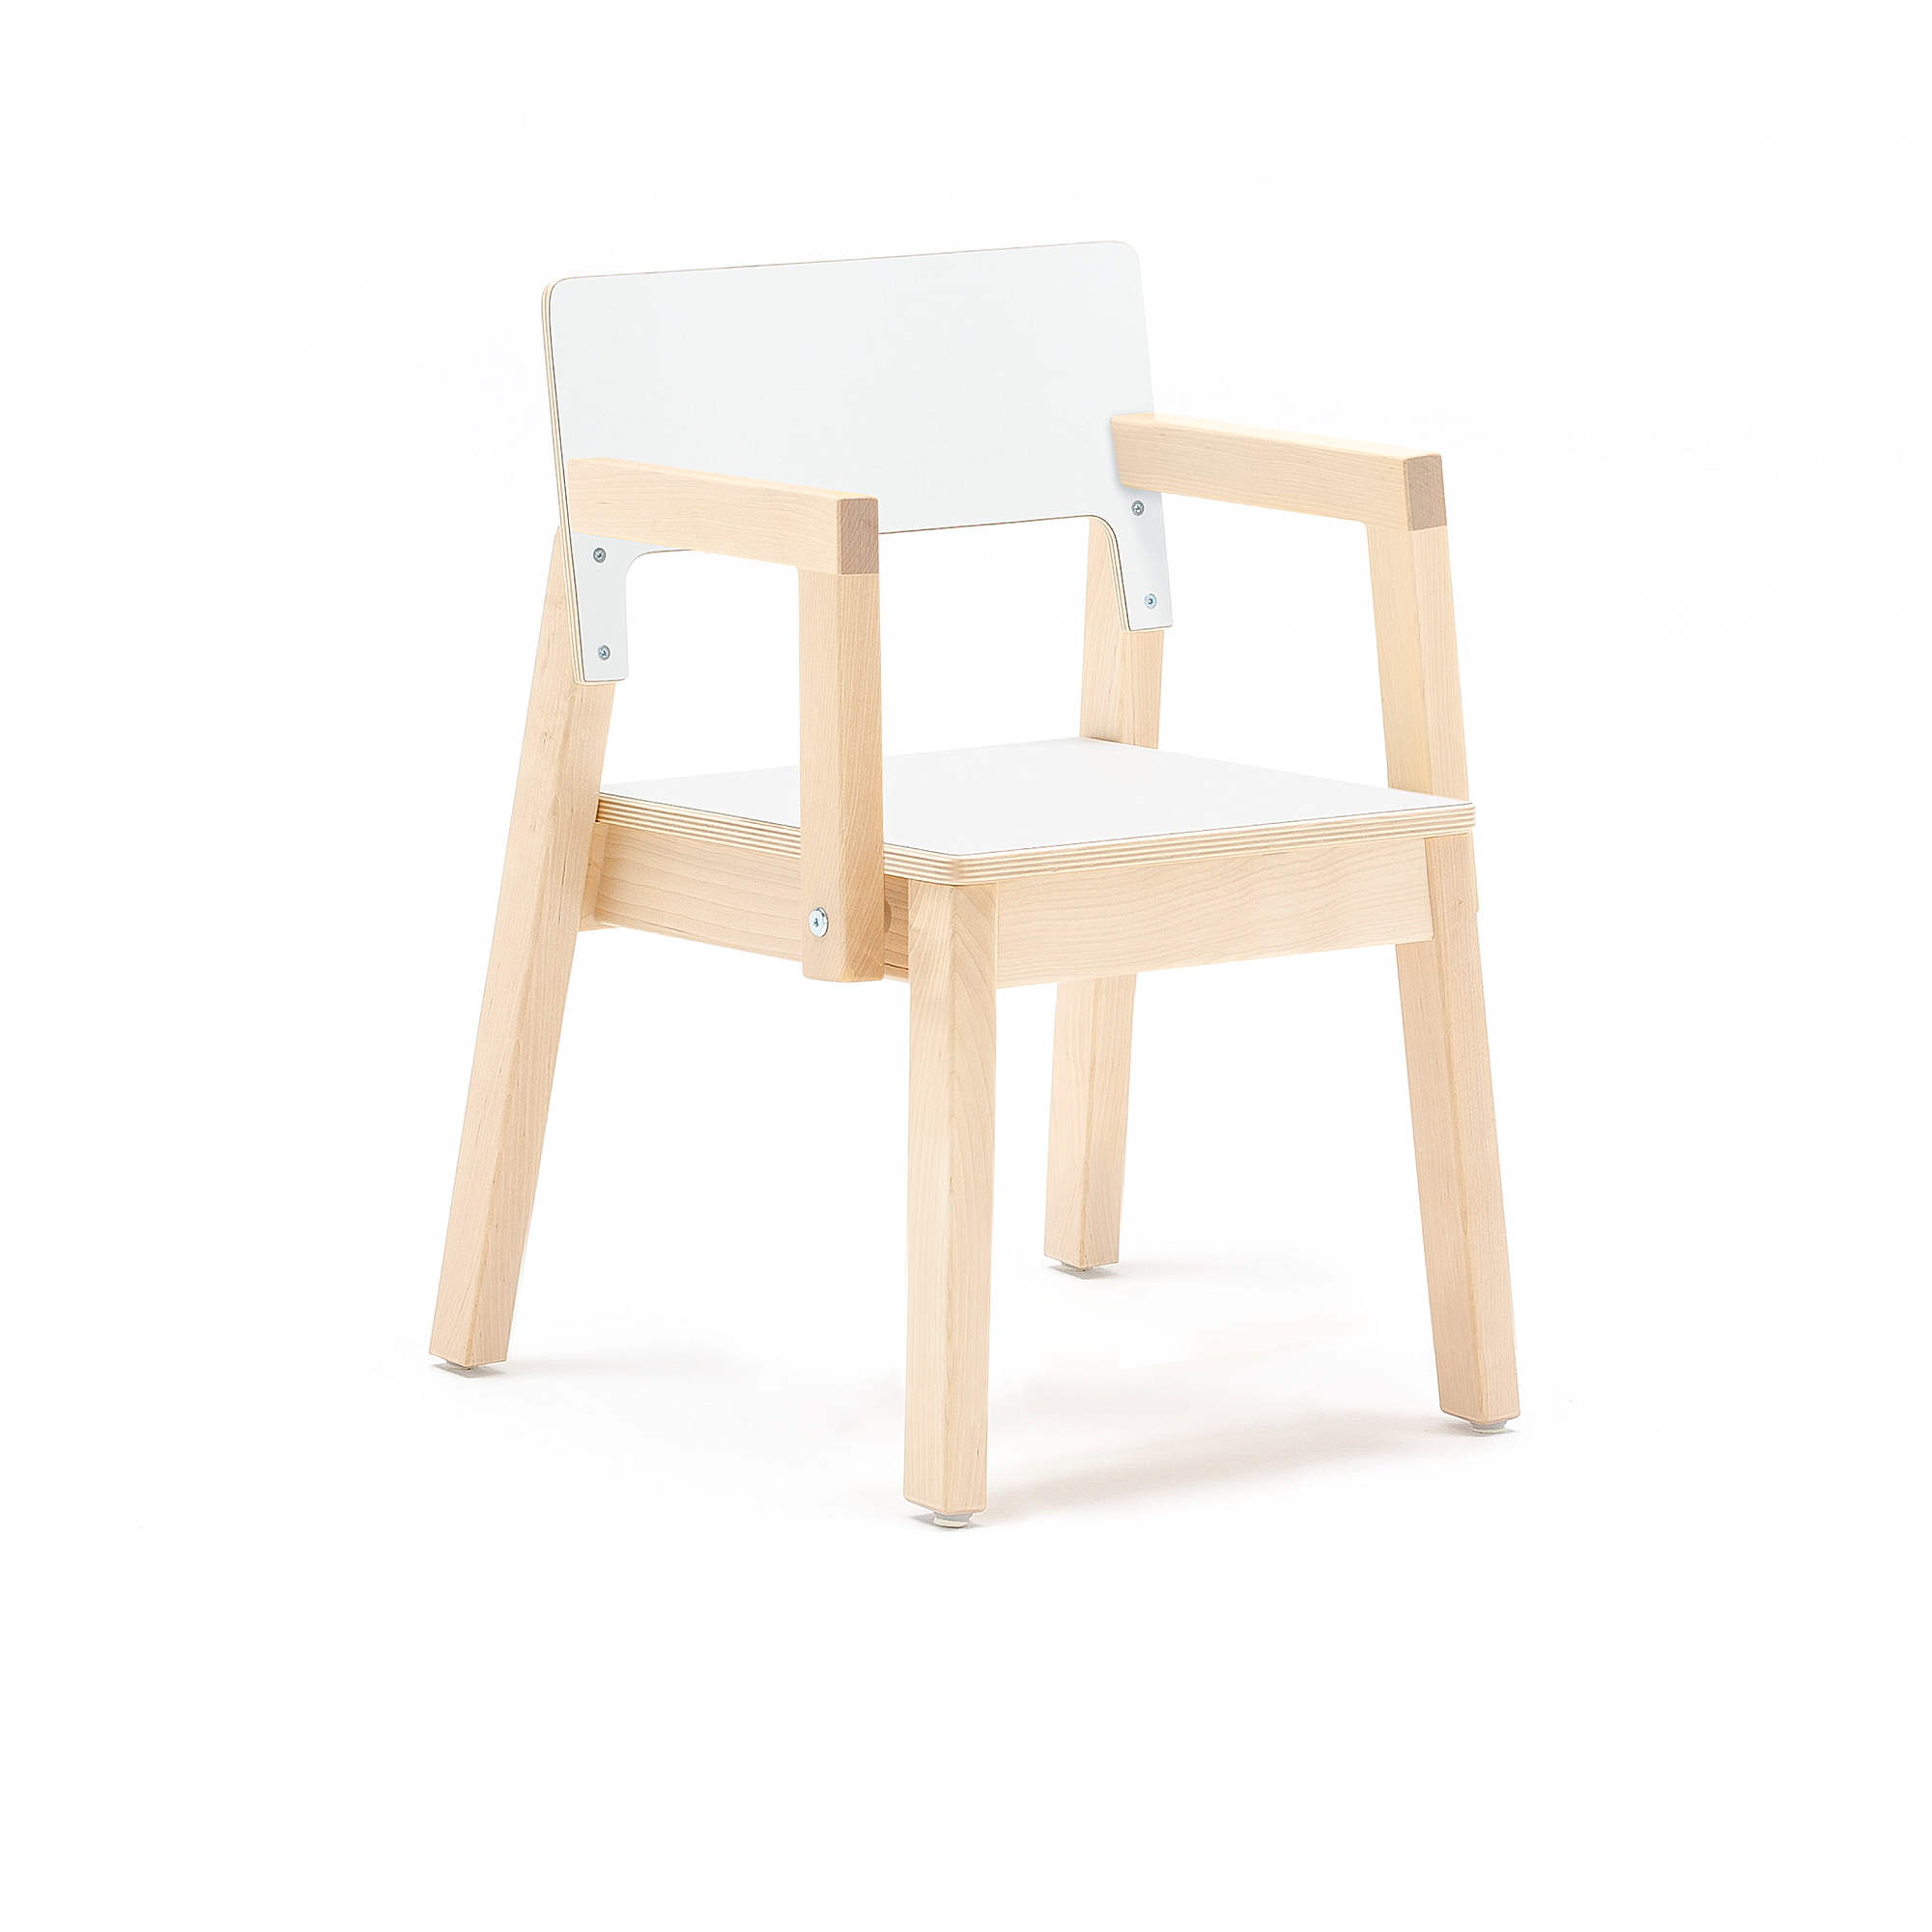 E-shop Detská stolička LOVE s opierkami rúk, V 350 mm, breza, laminát - biela